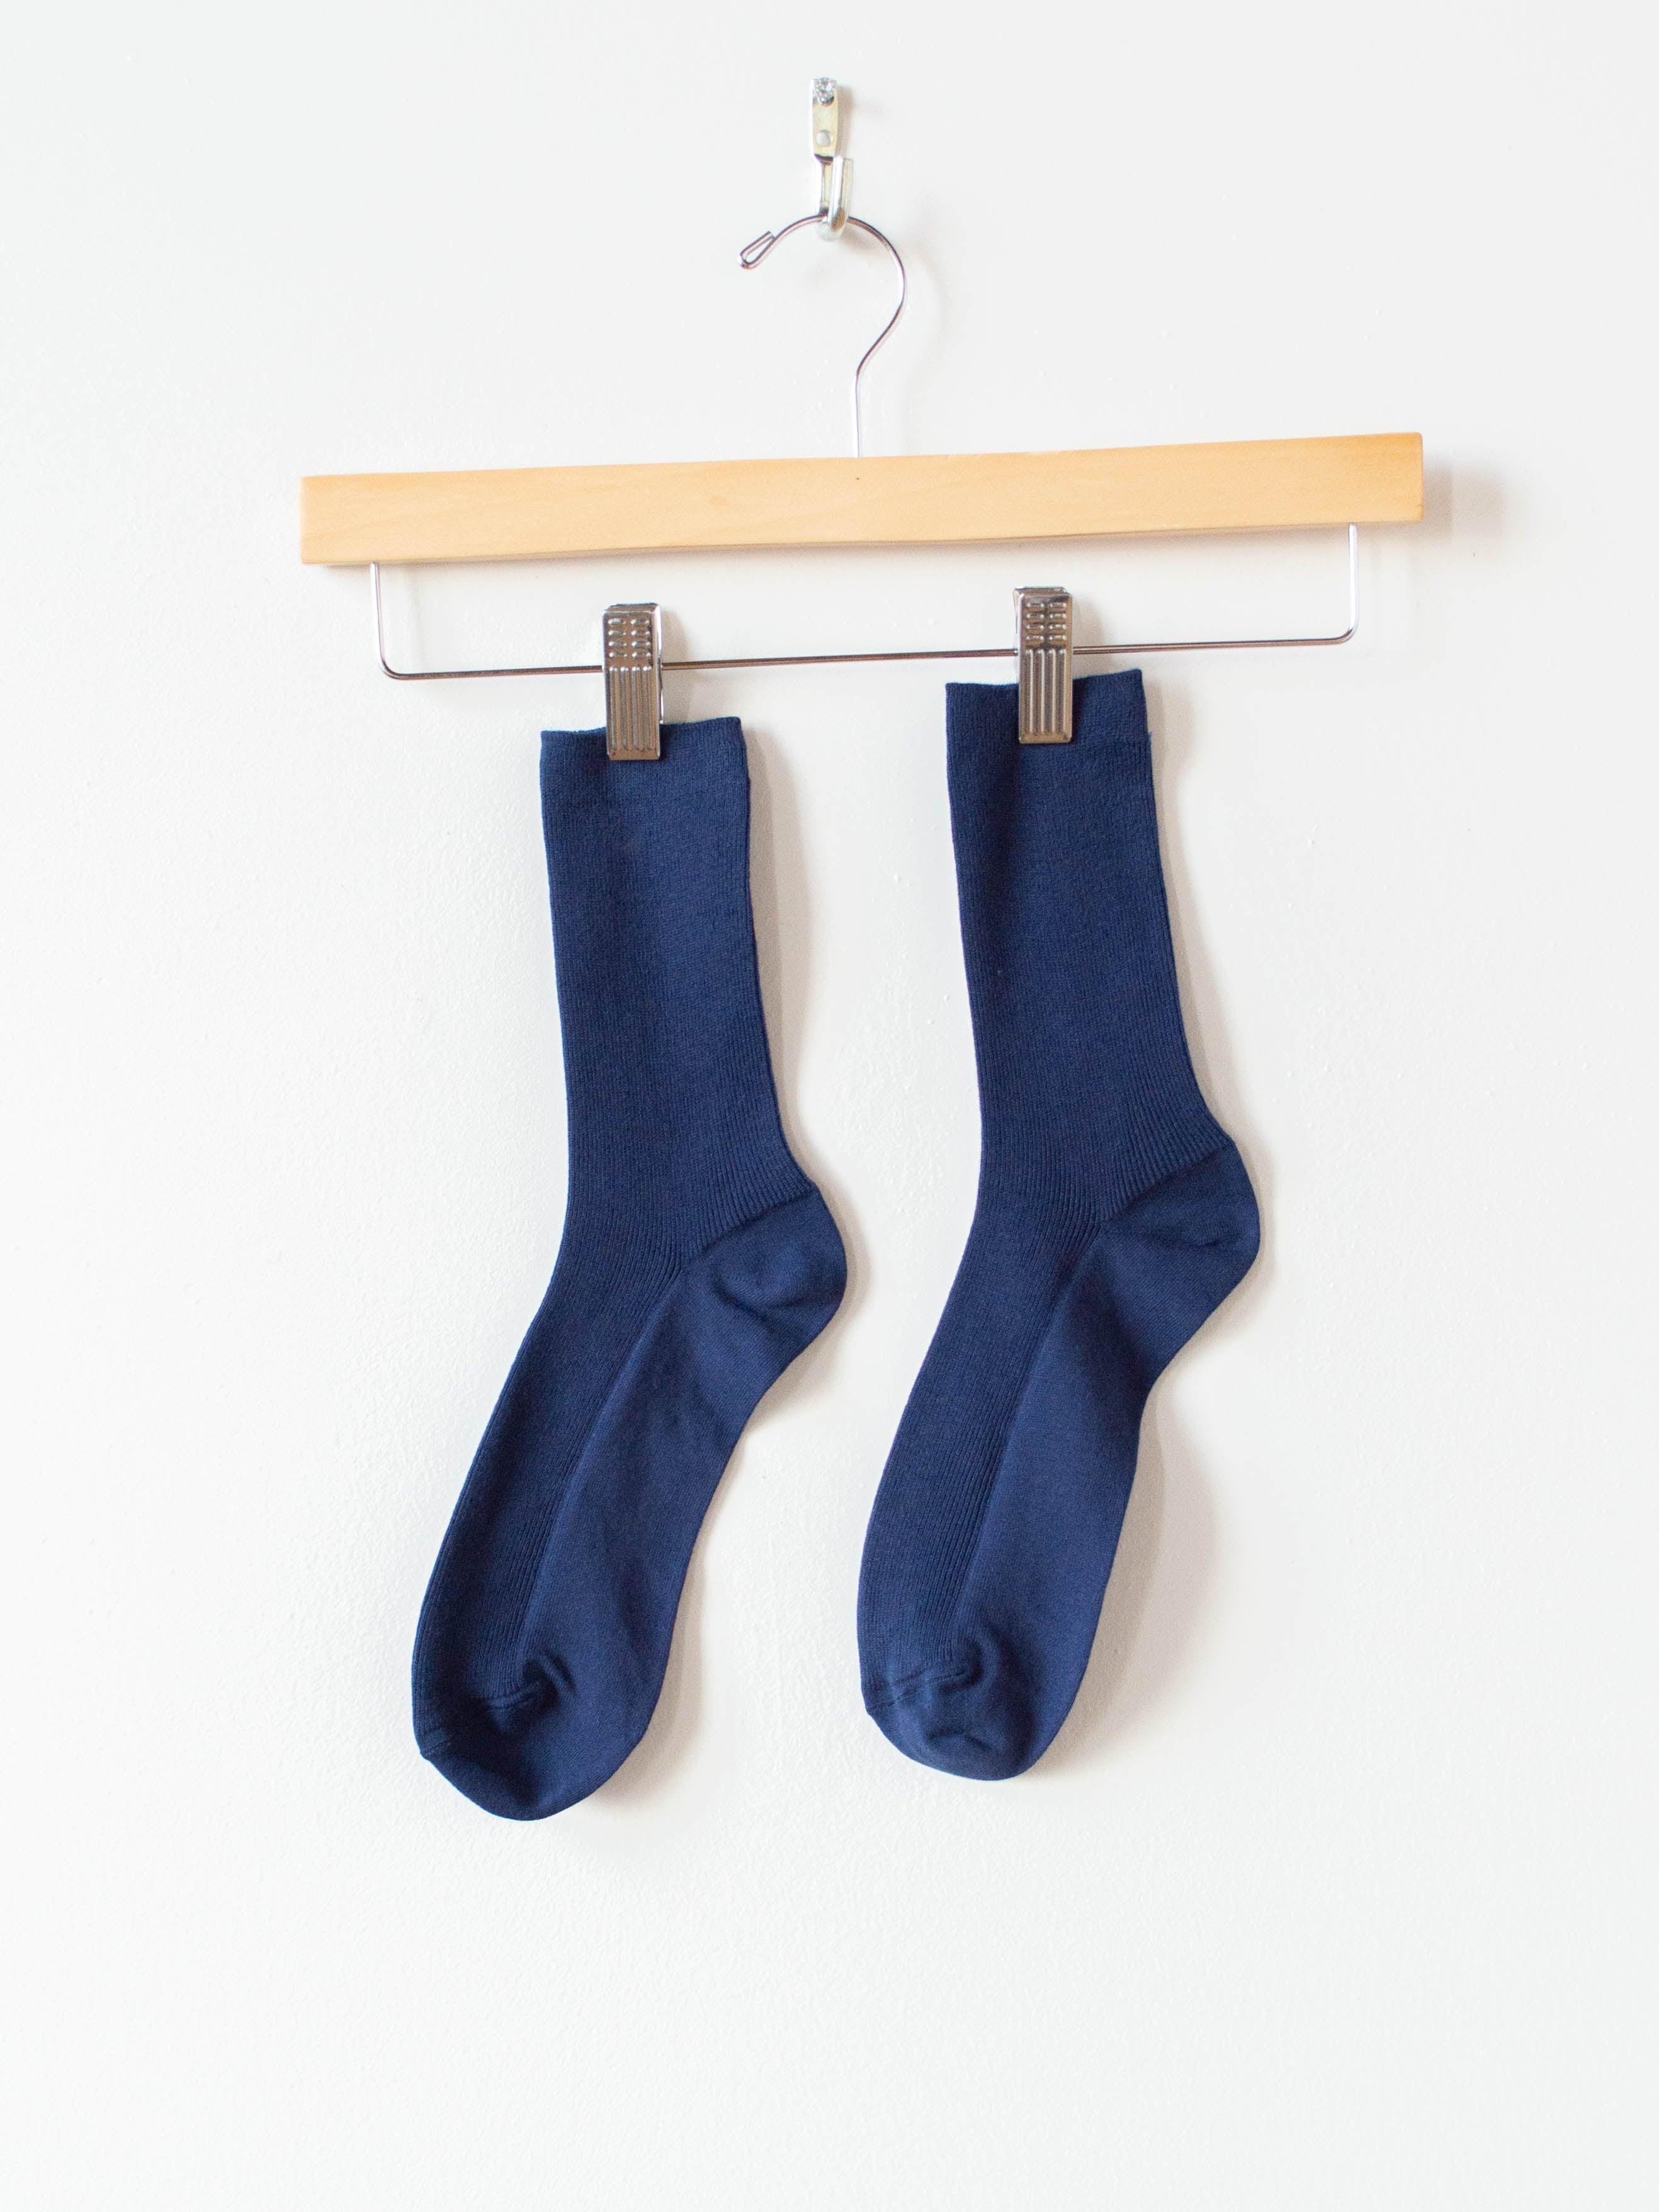 Namu Shop - Veritecoeur Cotton Socks - Blue Navy